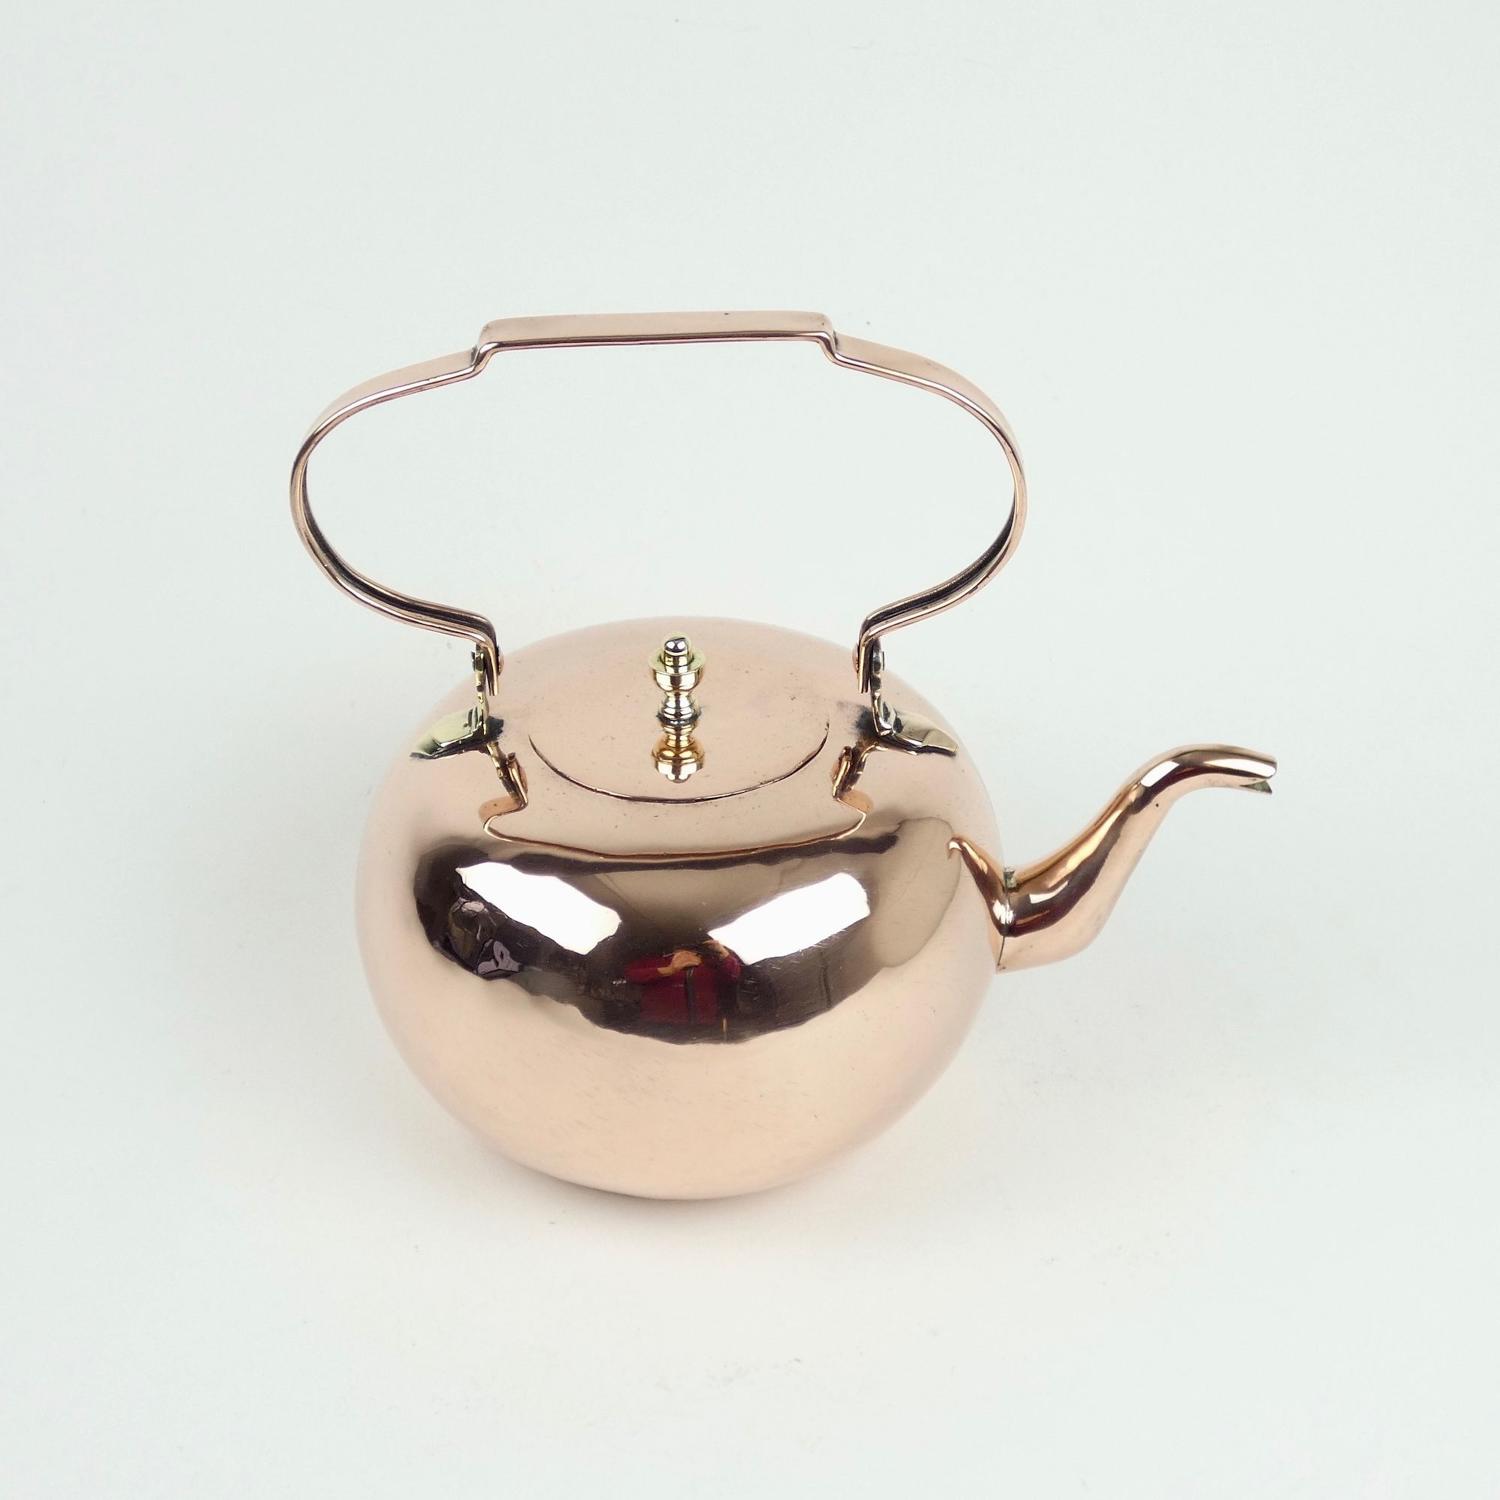 Unusual copper kettle